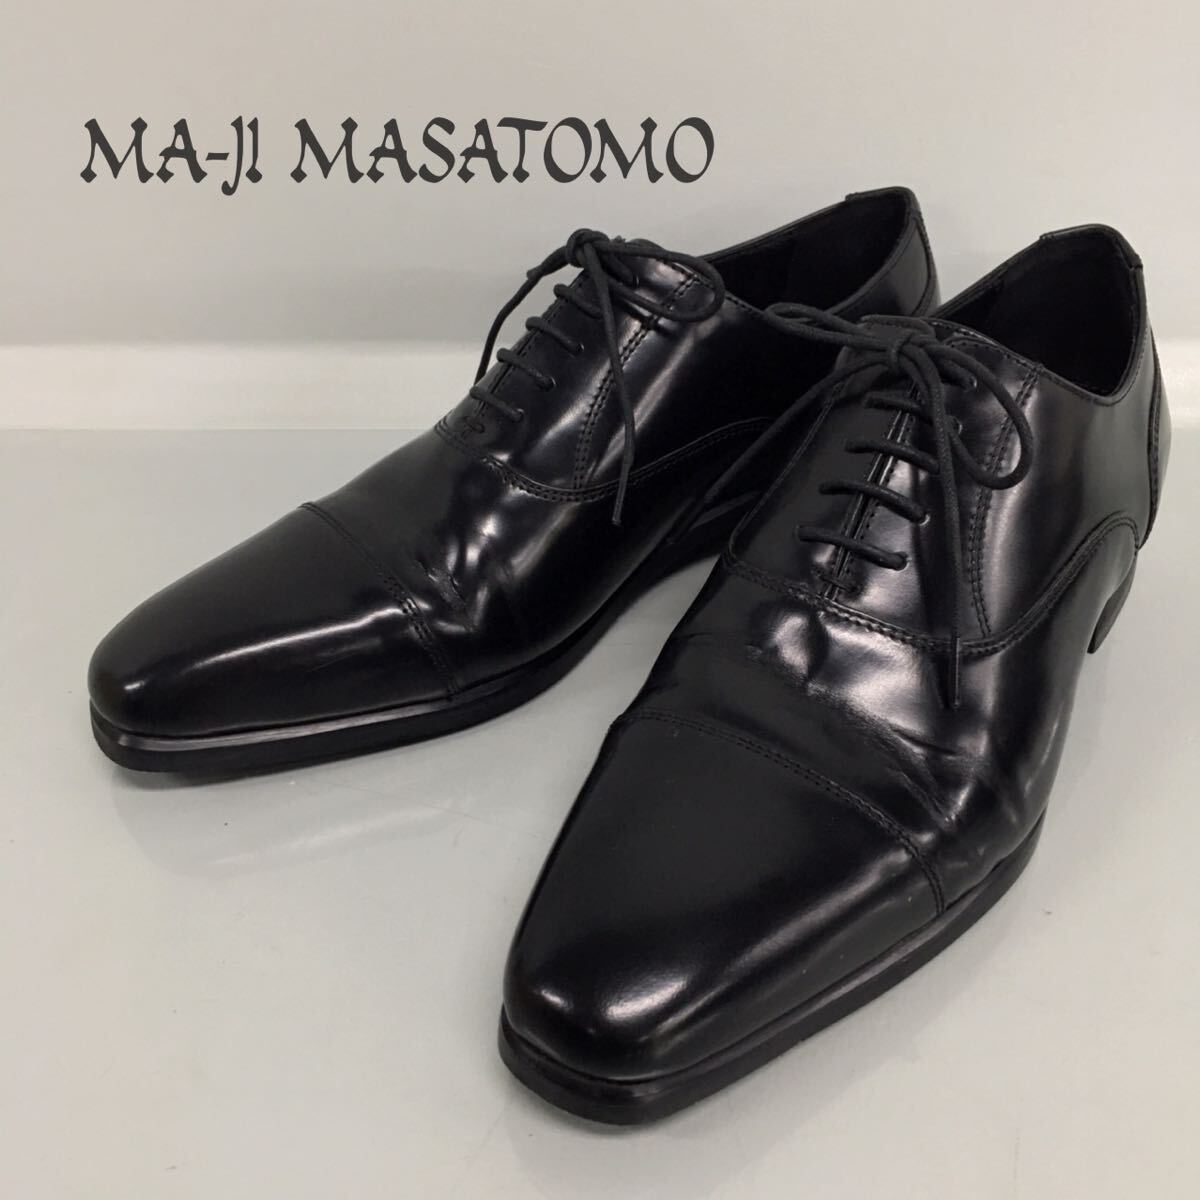 SU■ MA-JI MASATOMO マージマサトモ ビジネスシューズ 黒 ブラック メンズ 25.5cm プレーントゥ レザー 革靴 ドレスシューズ 靴 中古品の画像1